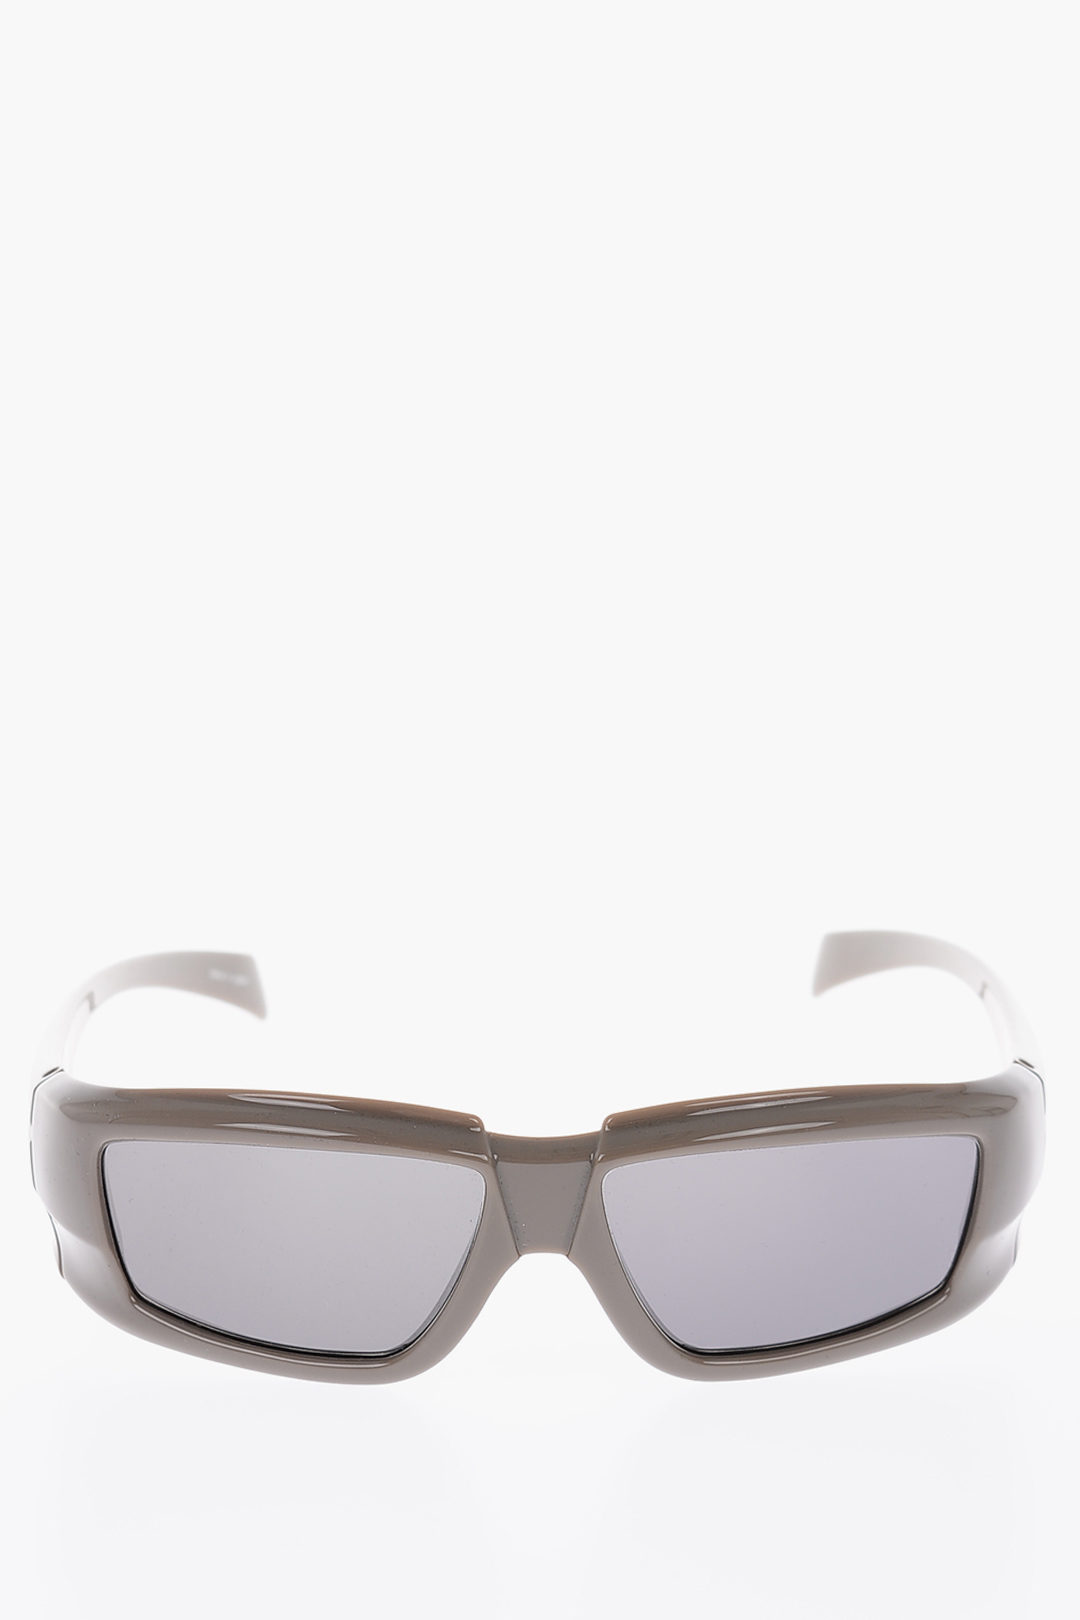 Rick Owens Rectangular Frame RICK DUSK Sunglasses men - Glamood Outlet